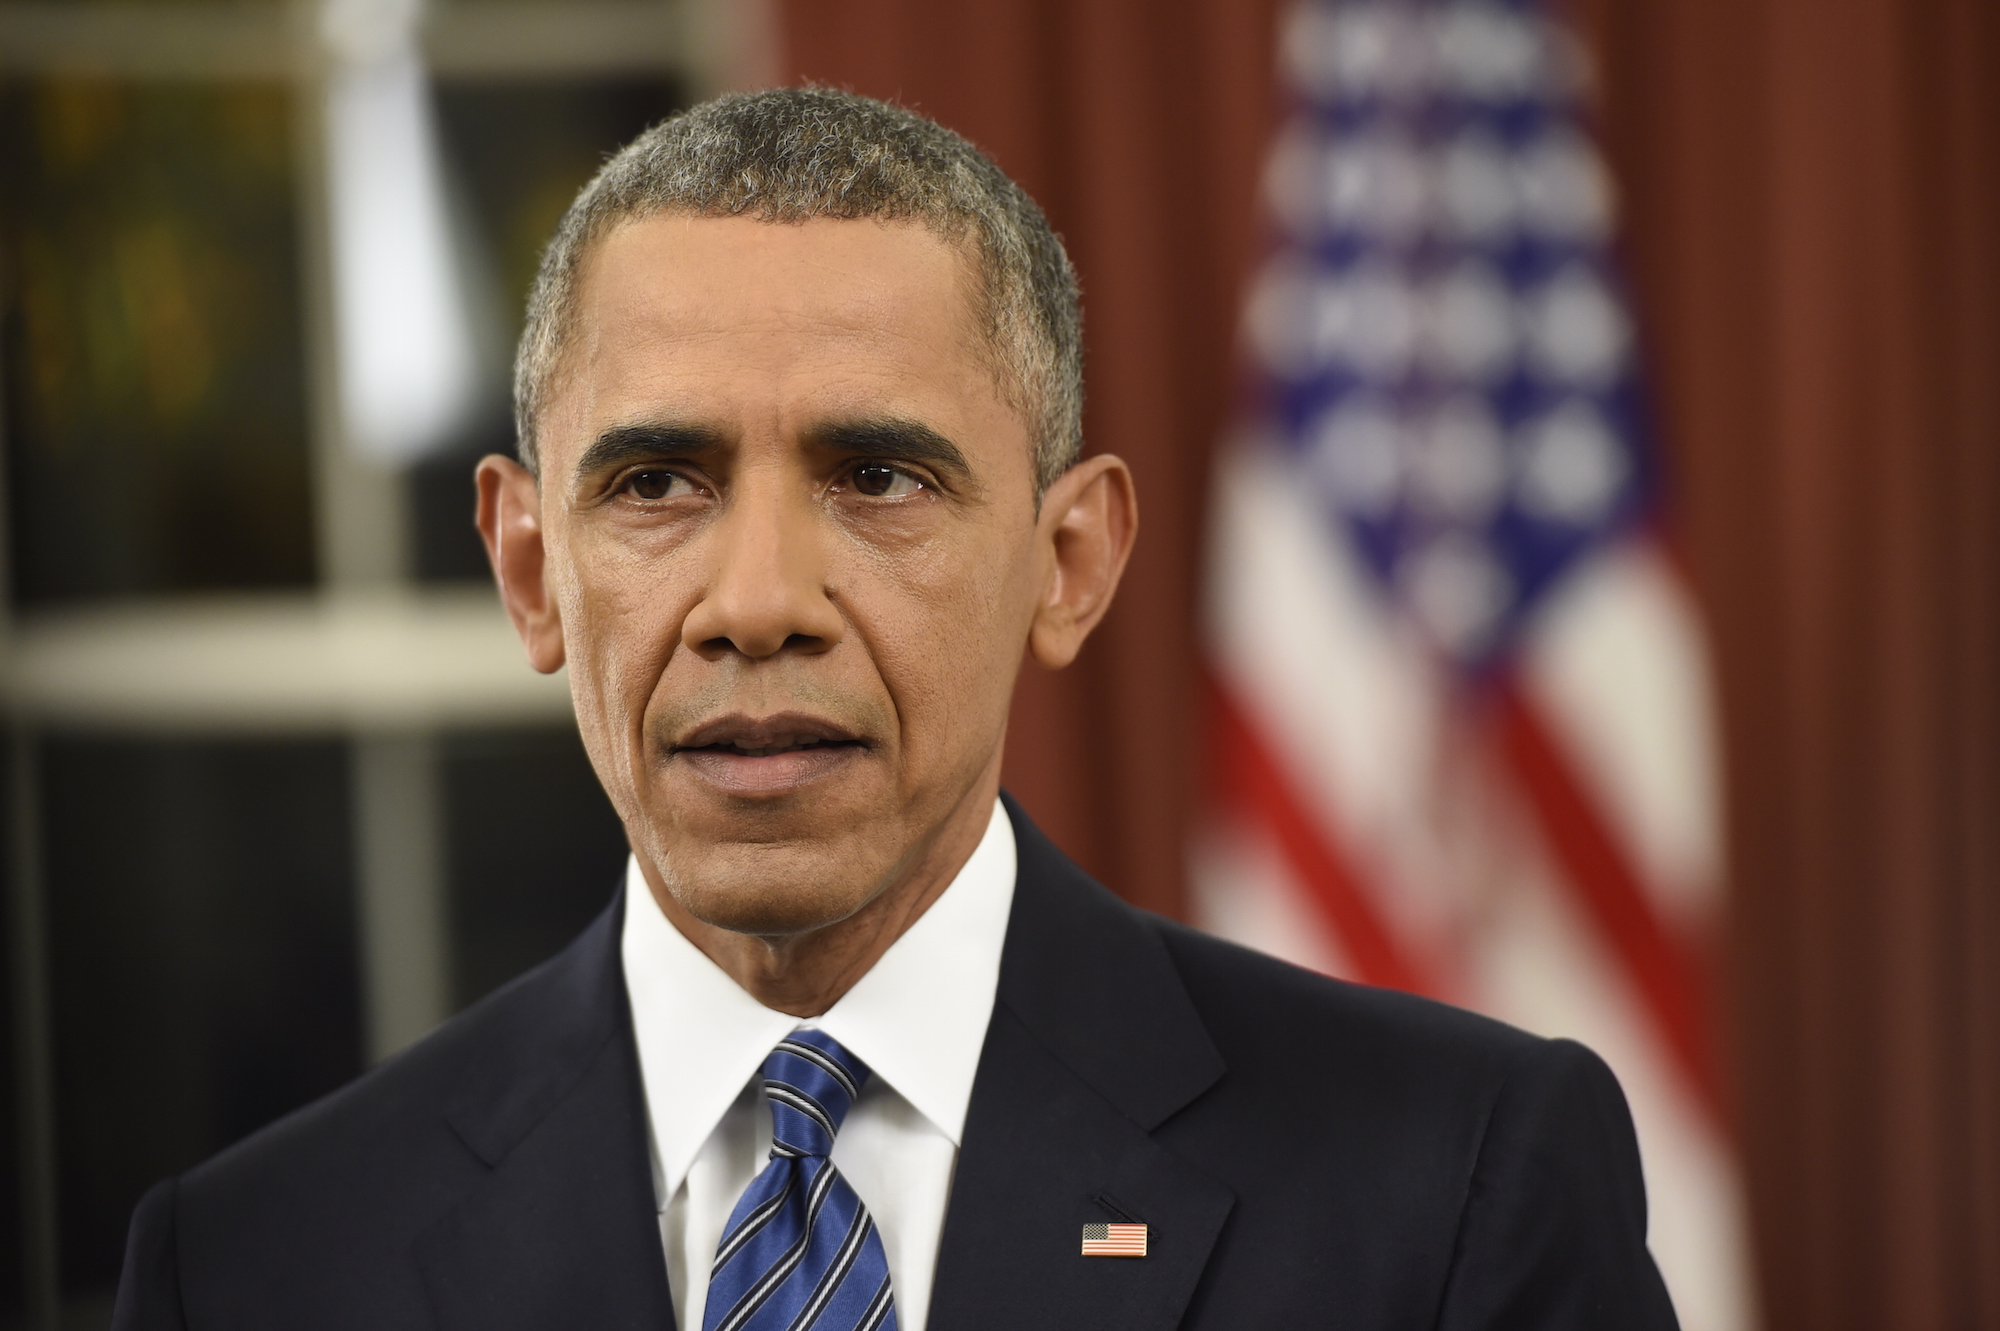 President Obama Addresses The Nation On Terrorism And San Bernardino Attacks